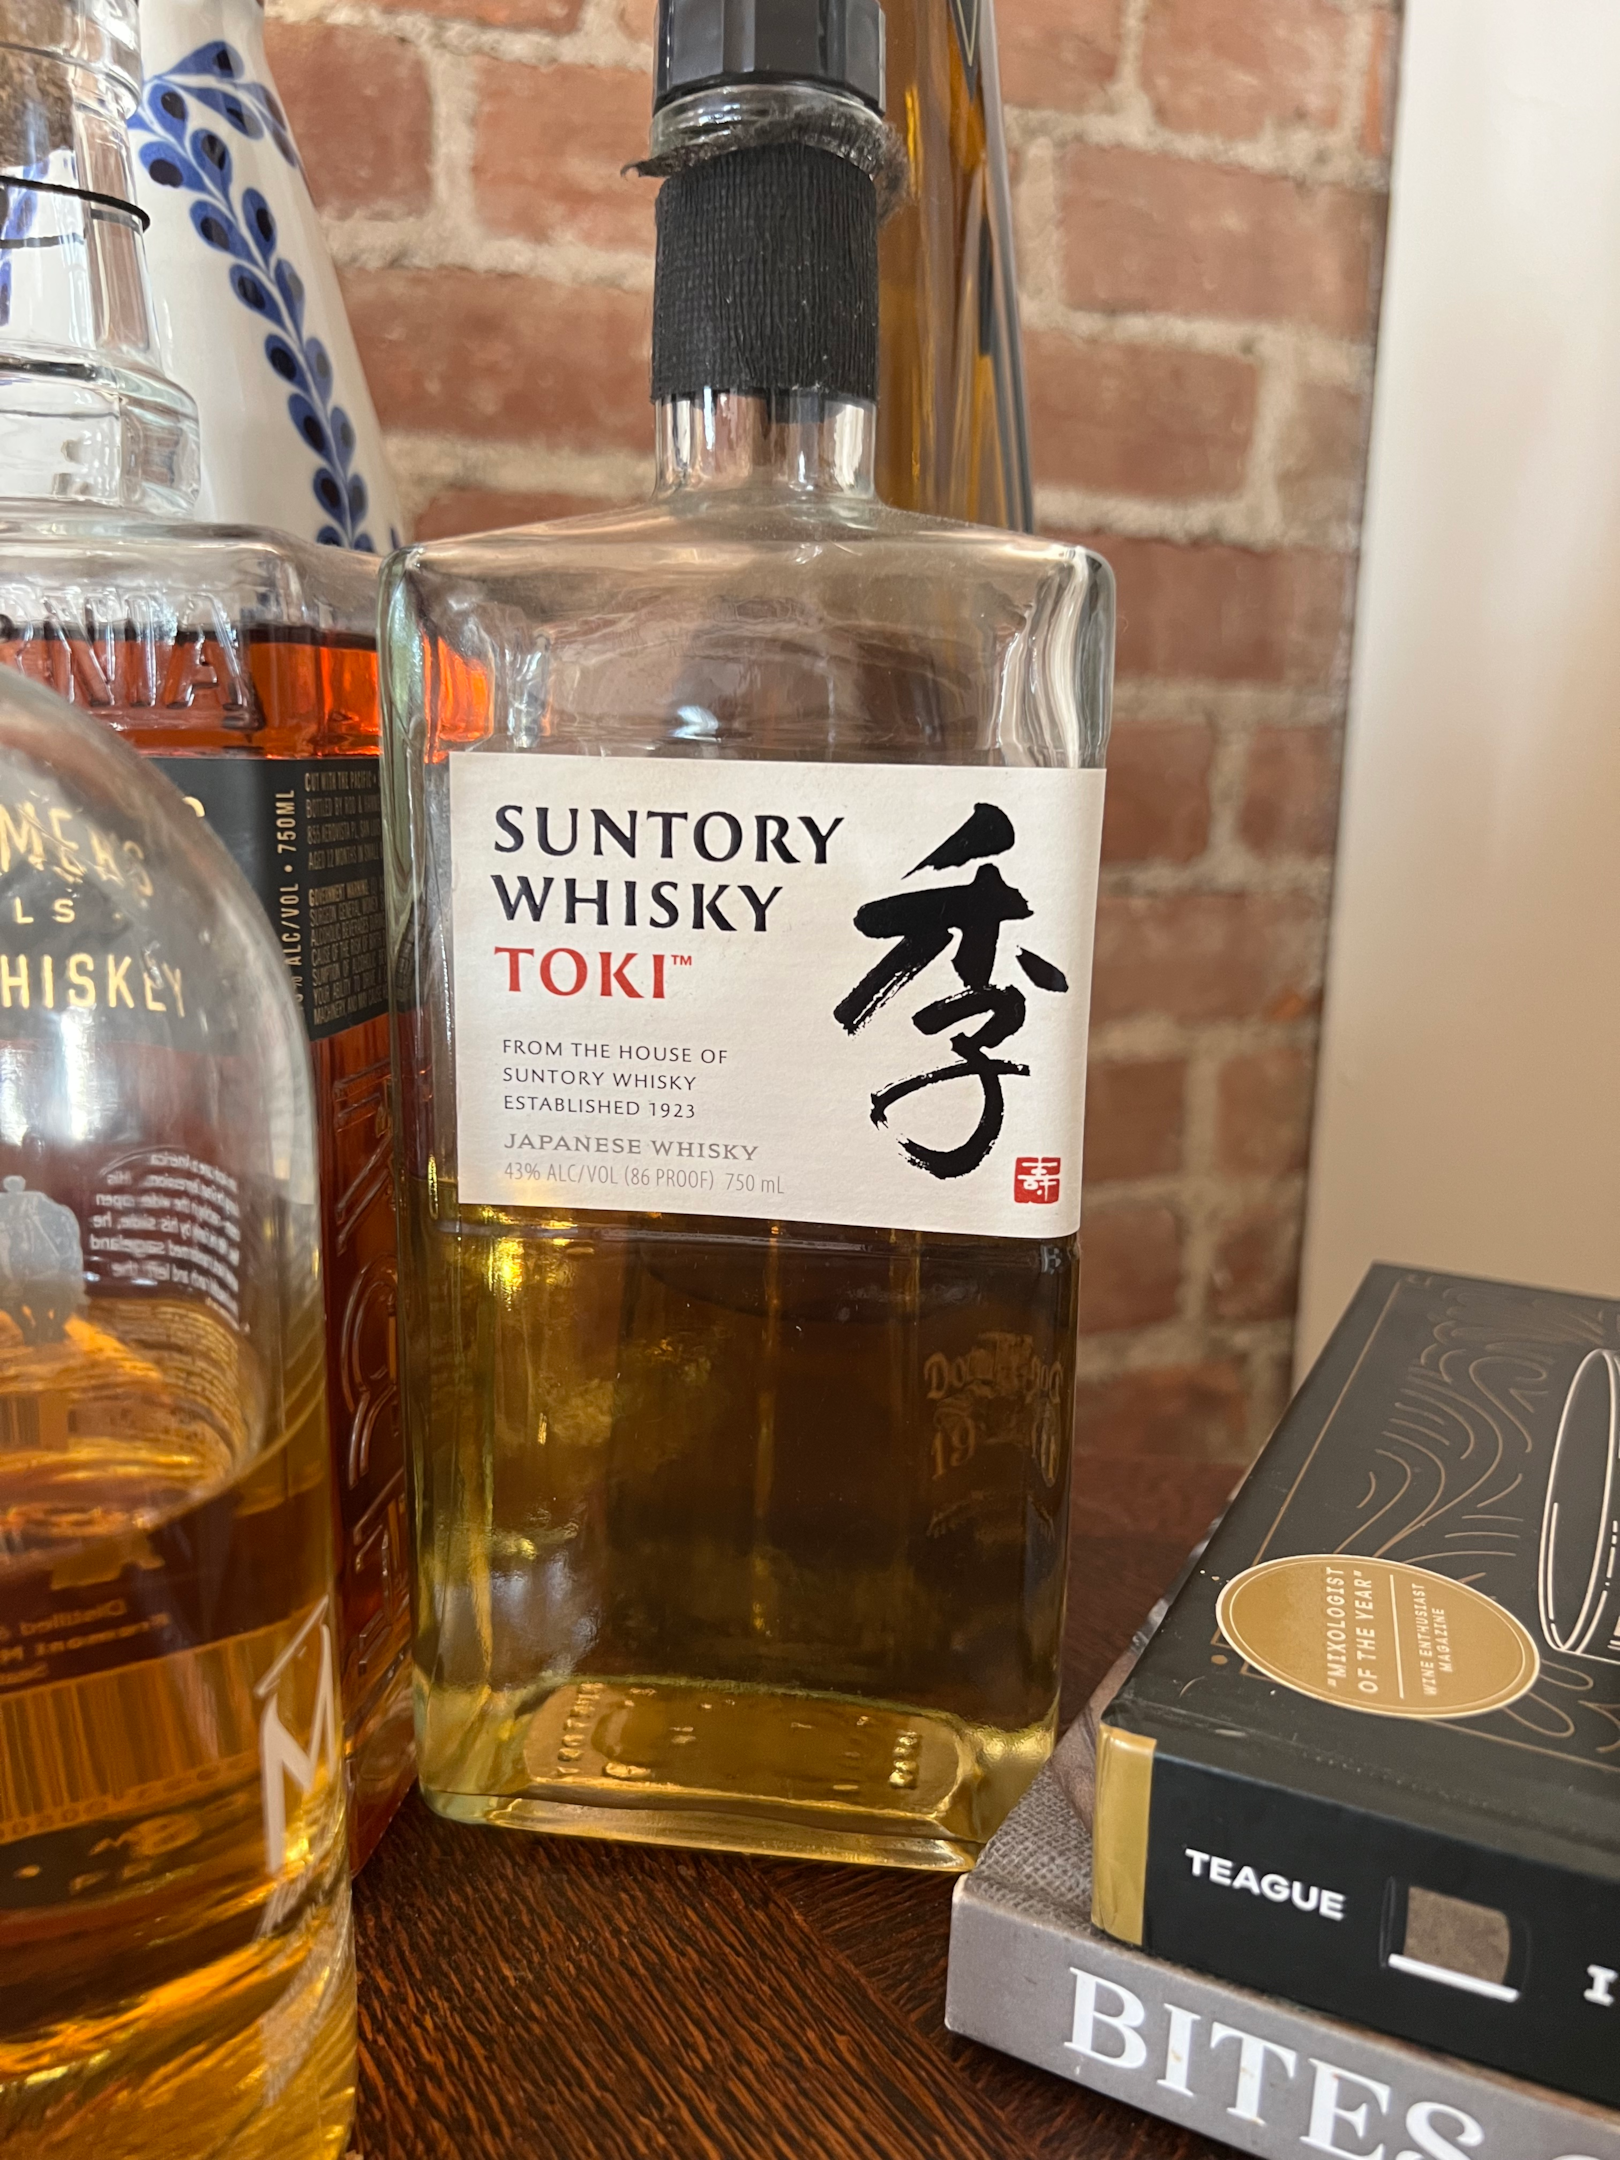 Suntory Whisky, Japanese Whisky